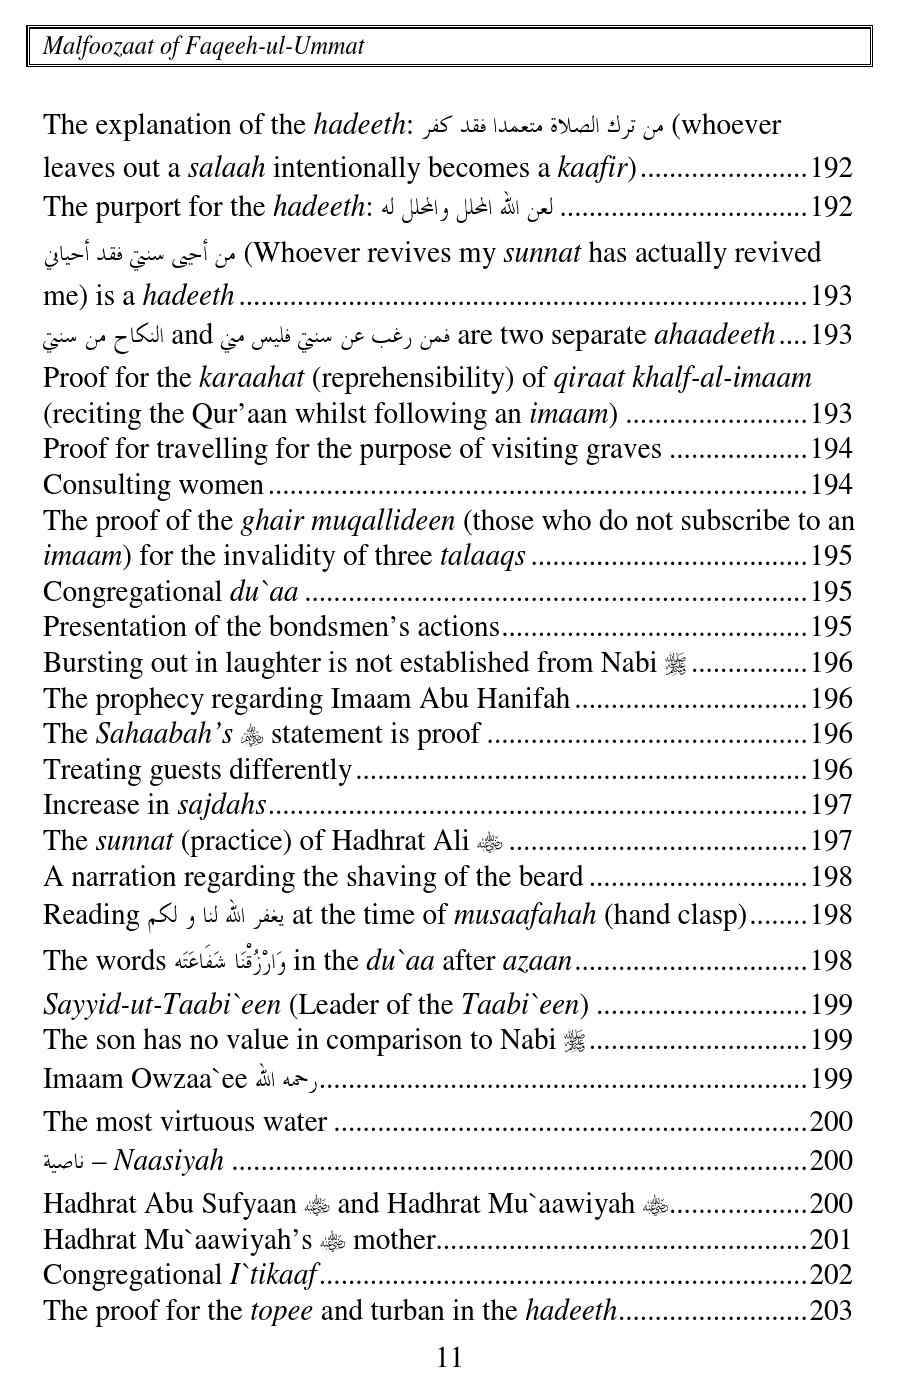 Malfoozat-Mahmood-Gangohi.pdf, 1207- pages 